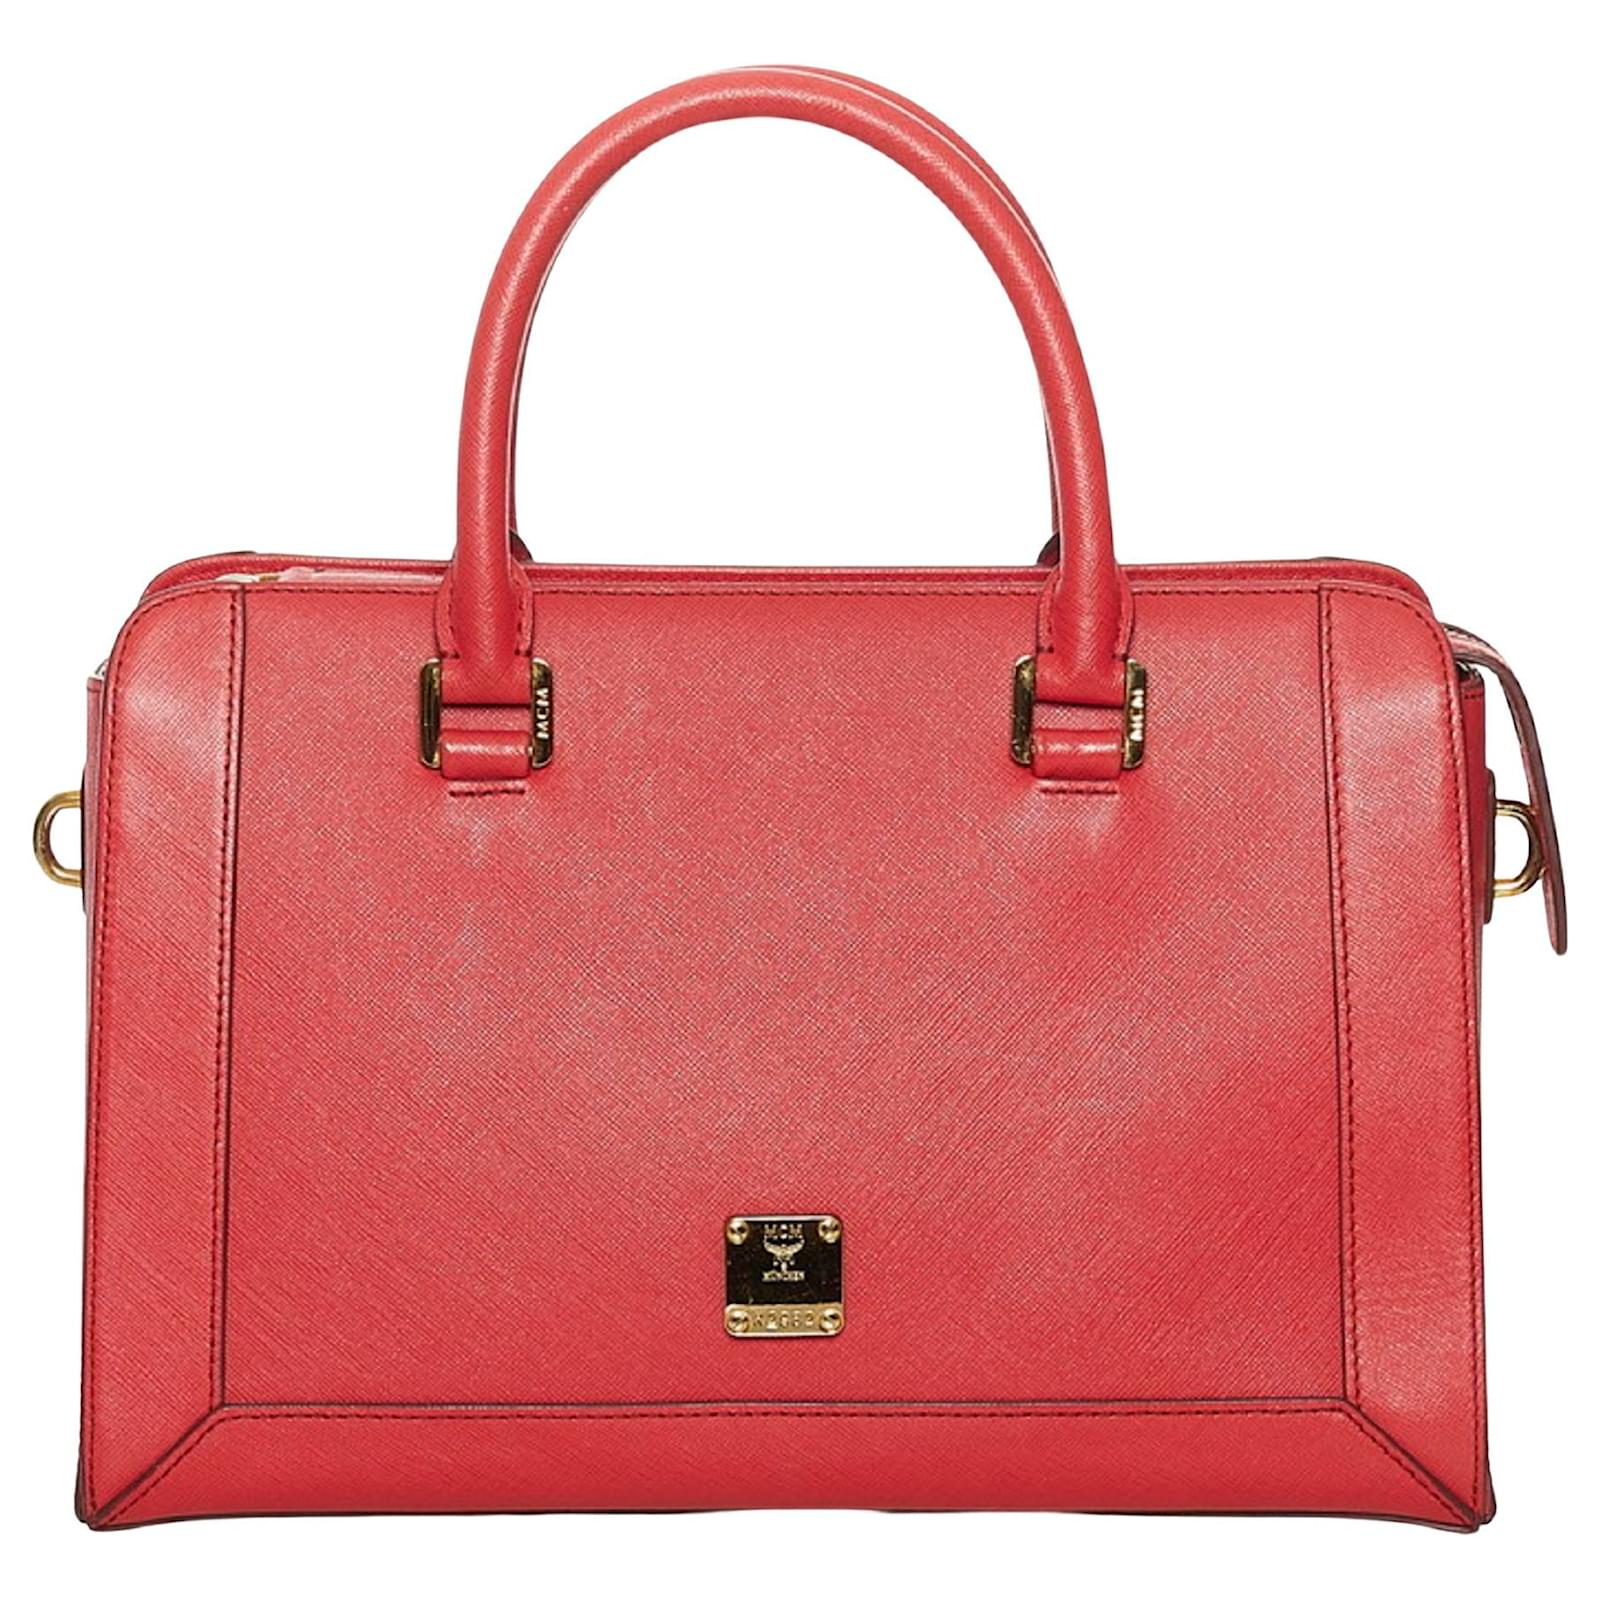 mcm handbag brand new